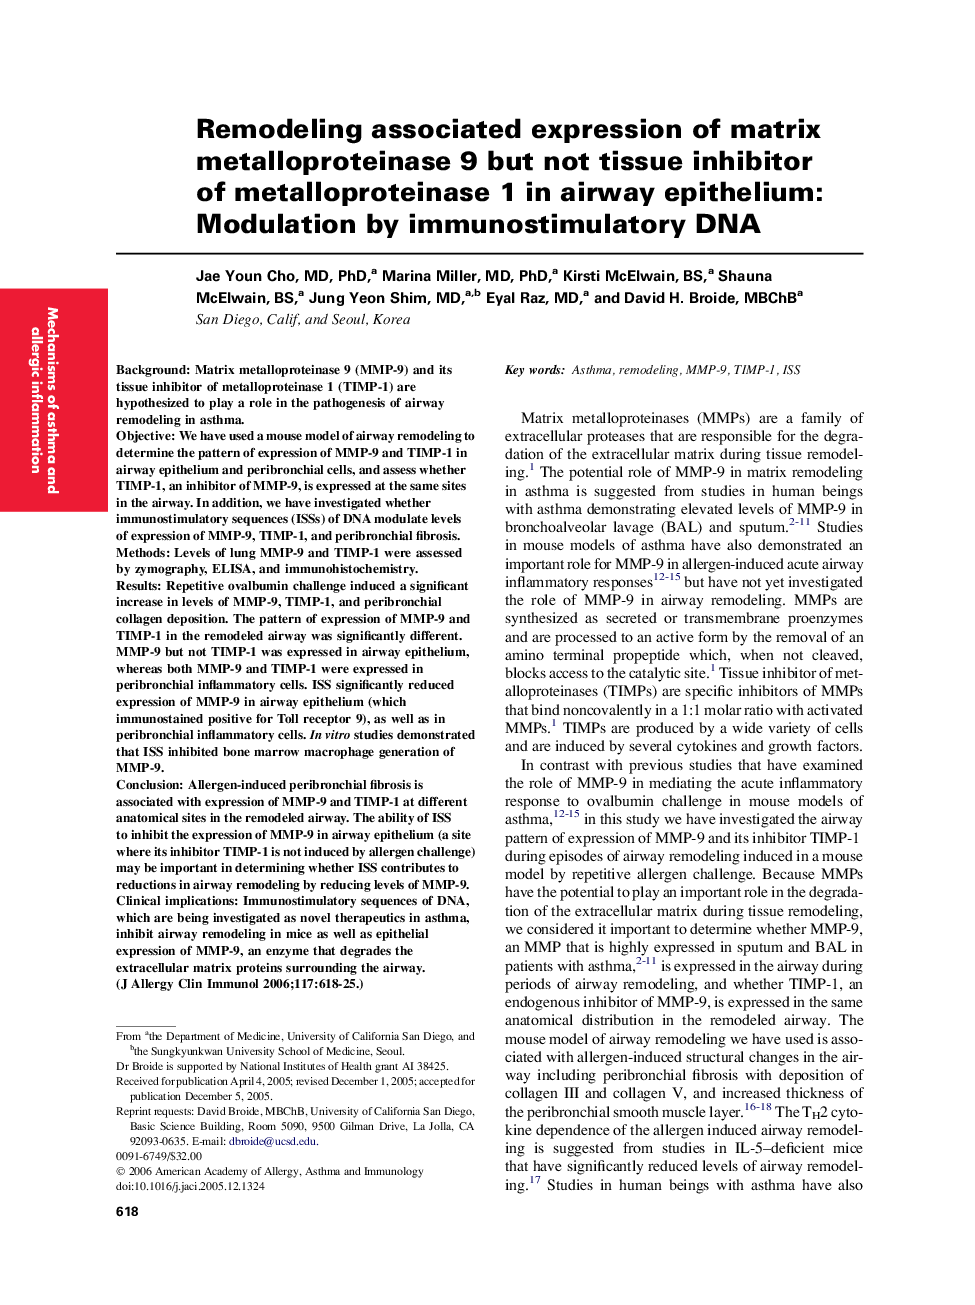 Remodeling associated expression of matrix metalloproteinase 9 but not tissue inhibitor of metalloproteinase 1 in airway epithelium: Modulation by immunostimulatory DNA 